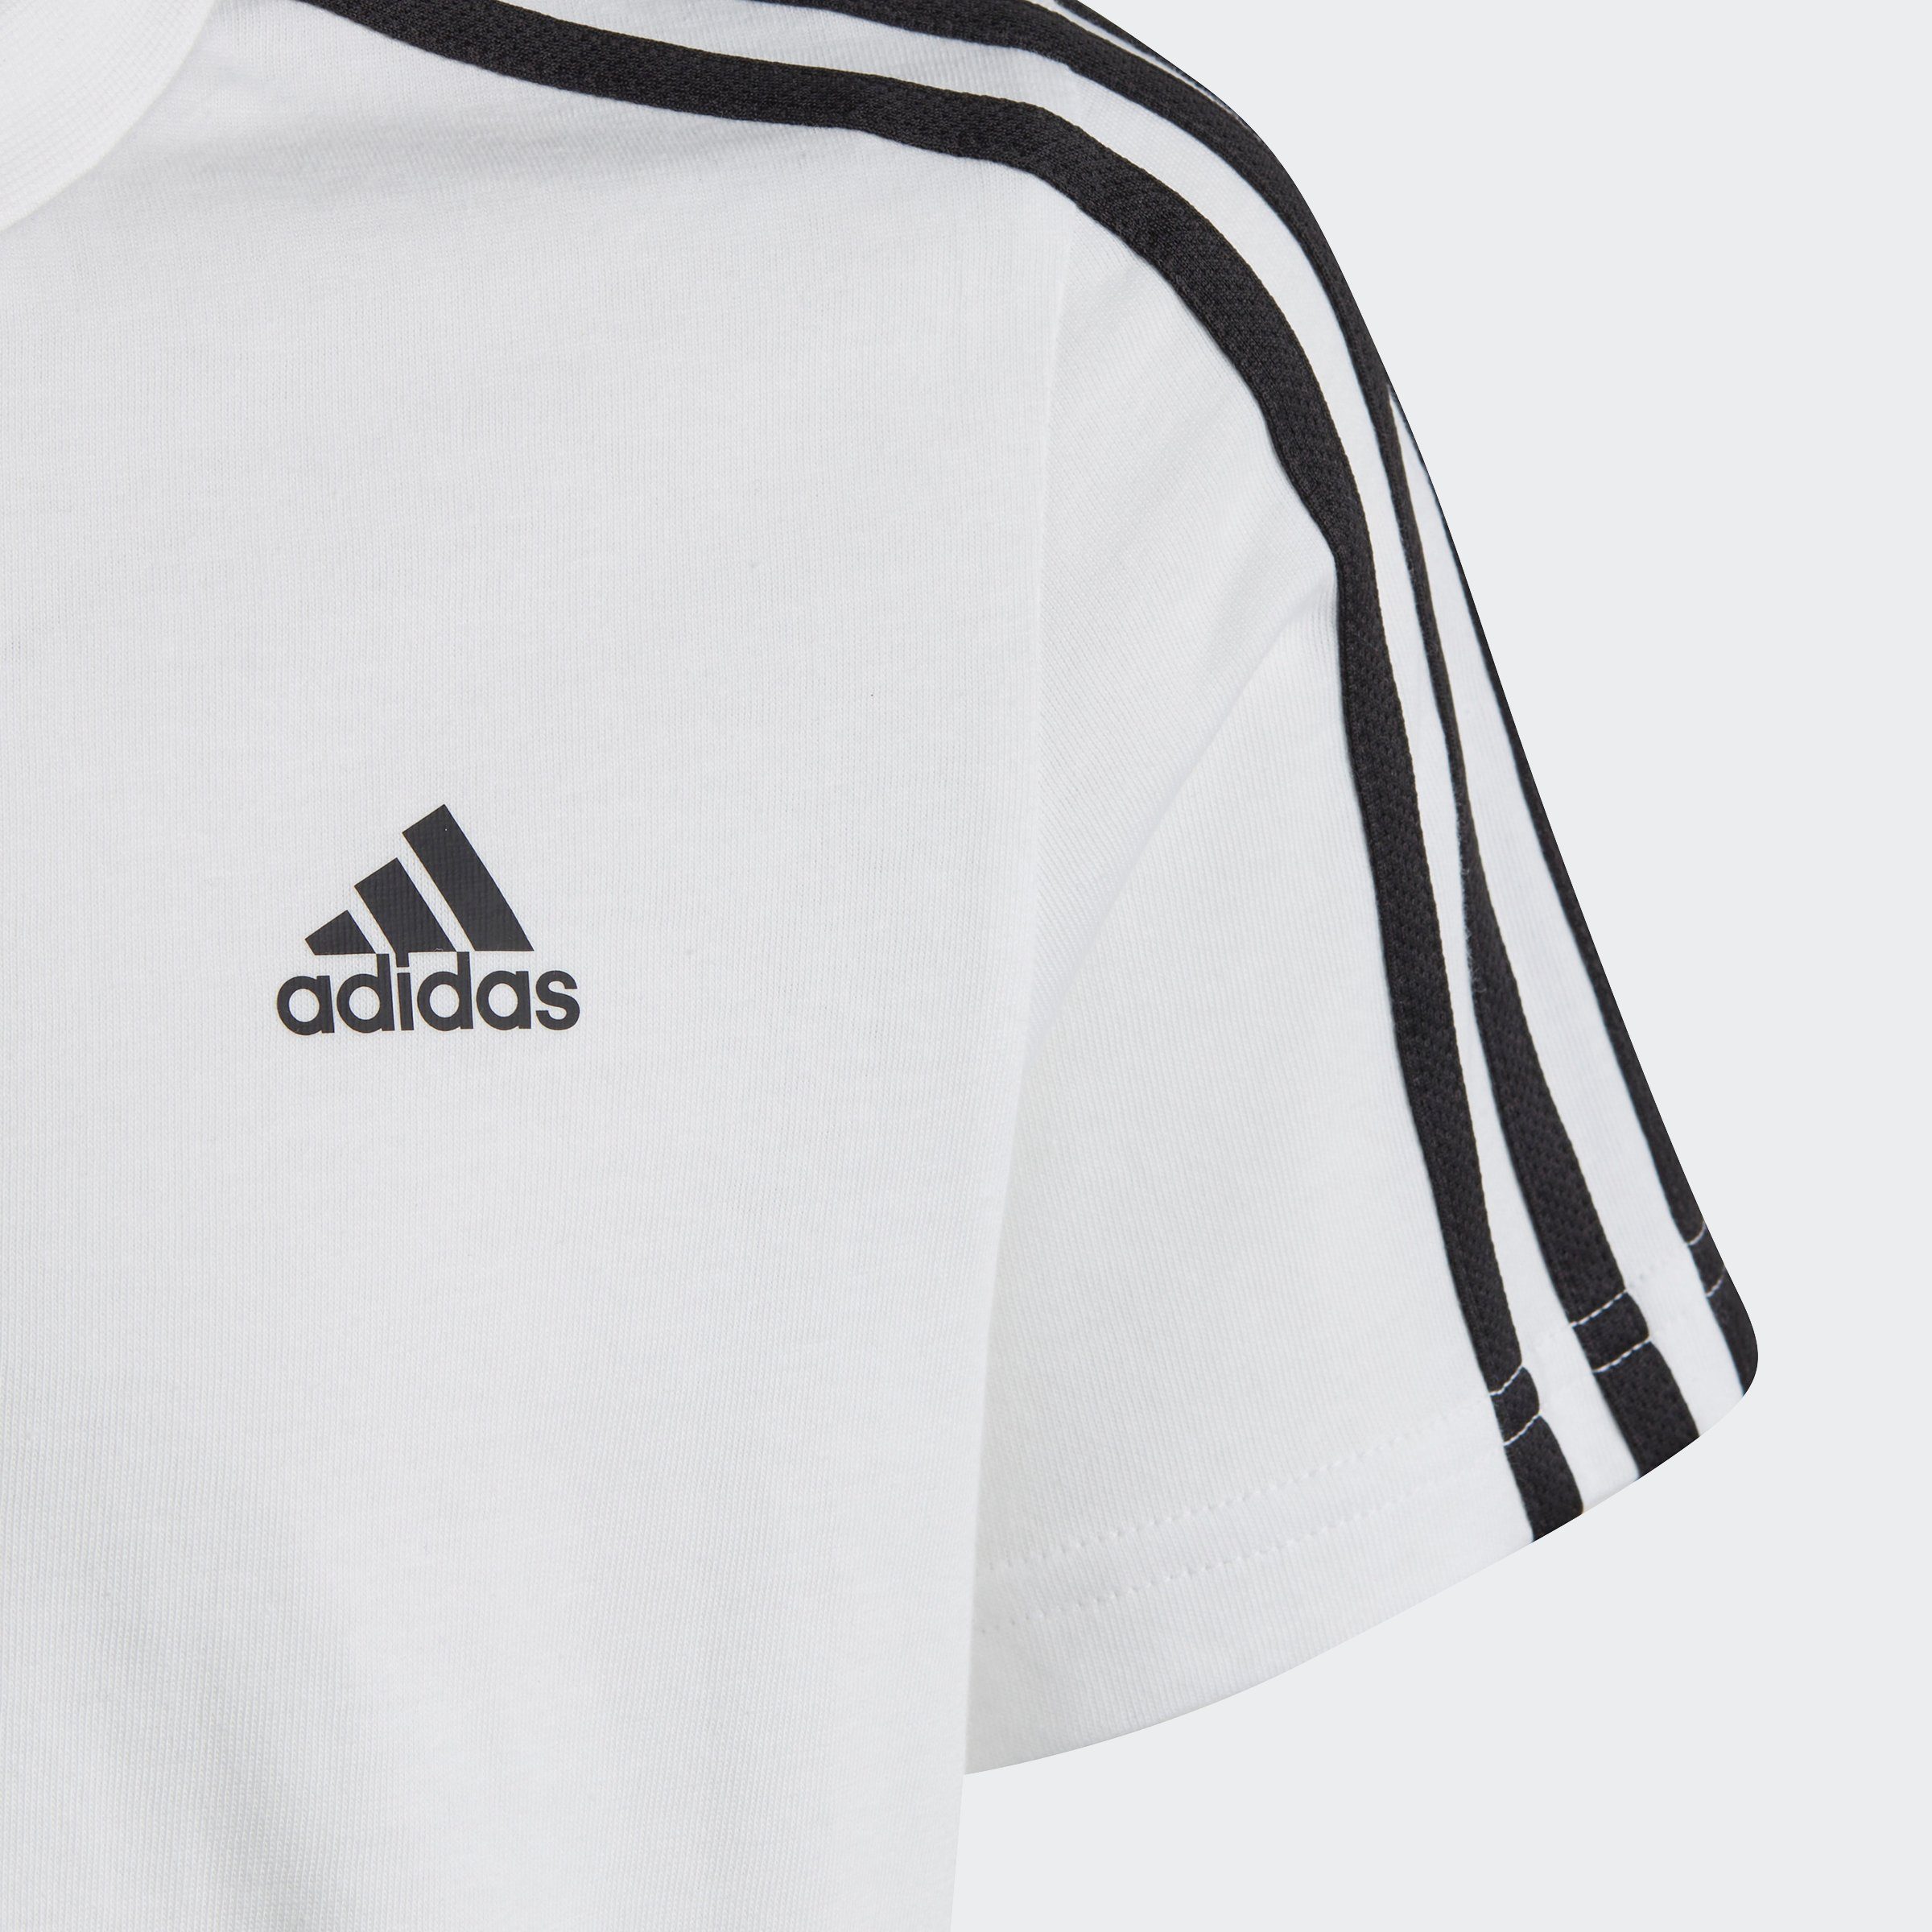 3S adidas Black White Sportswear T-Shirt / TEE U